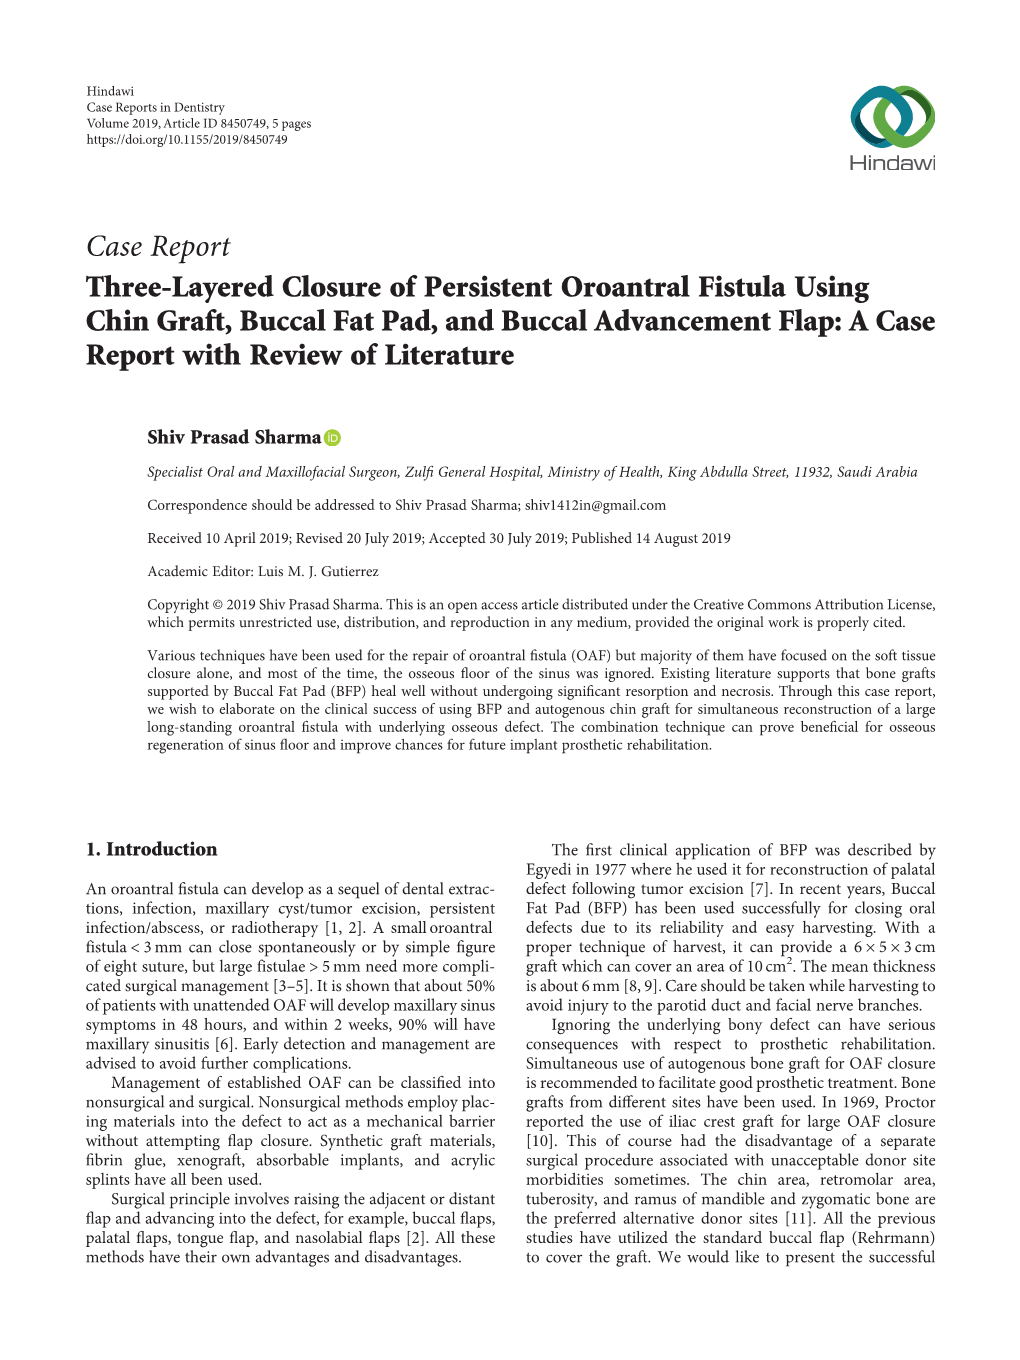 Case Report Three-Layered Closure of Persistent Oroantral Fistula Using